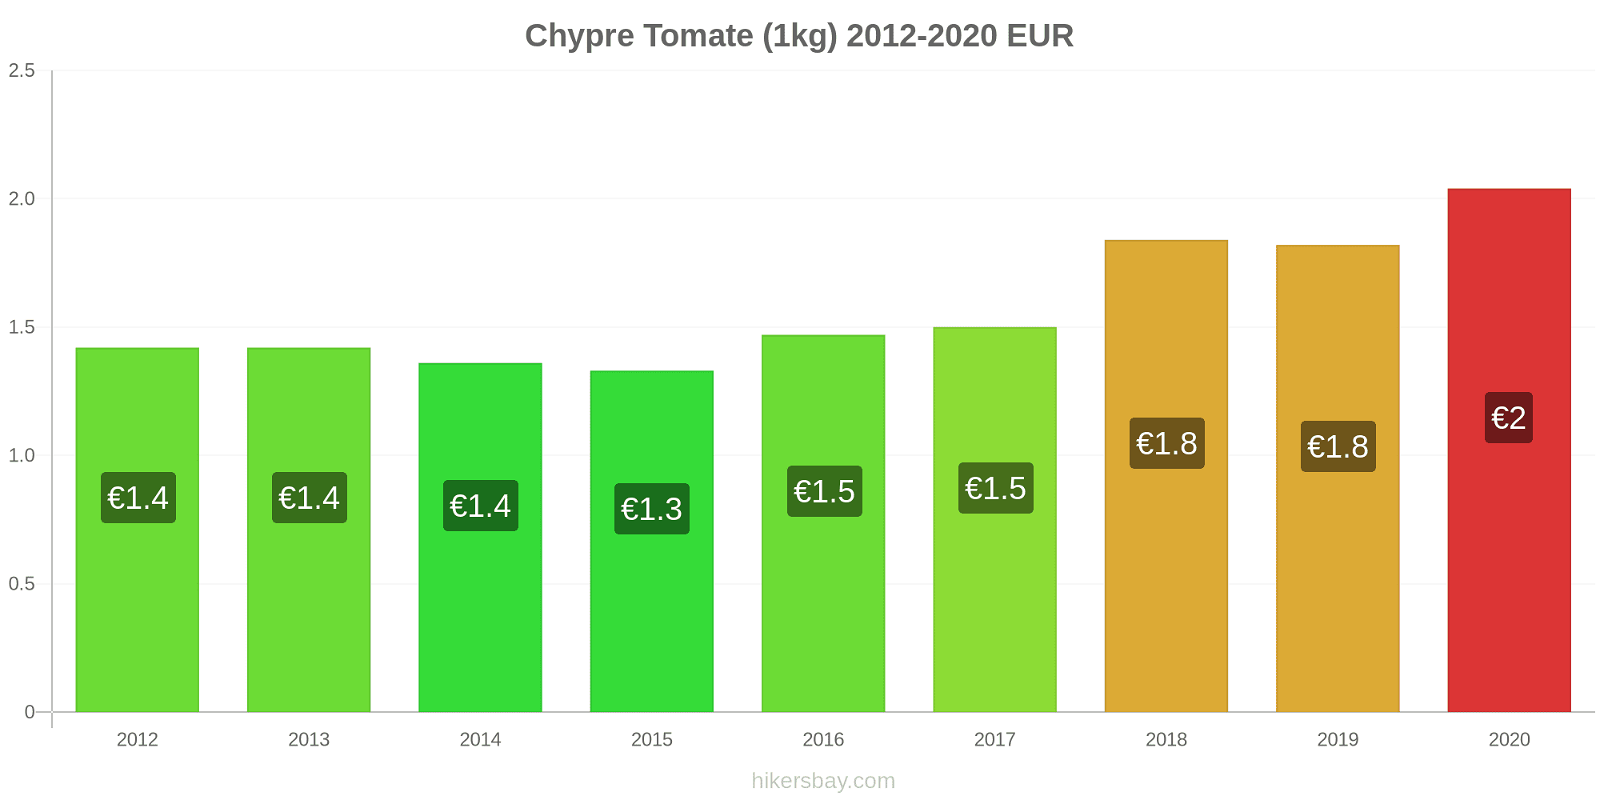 Chypre changements de prix Tomate (1kg) hikersbay.com